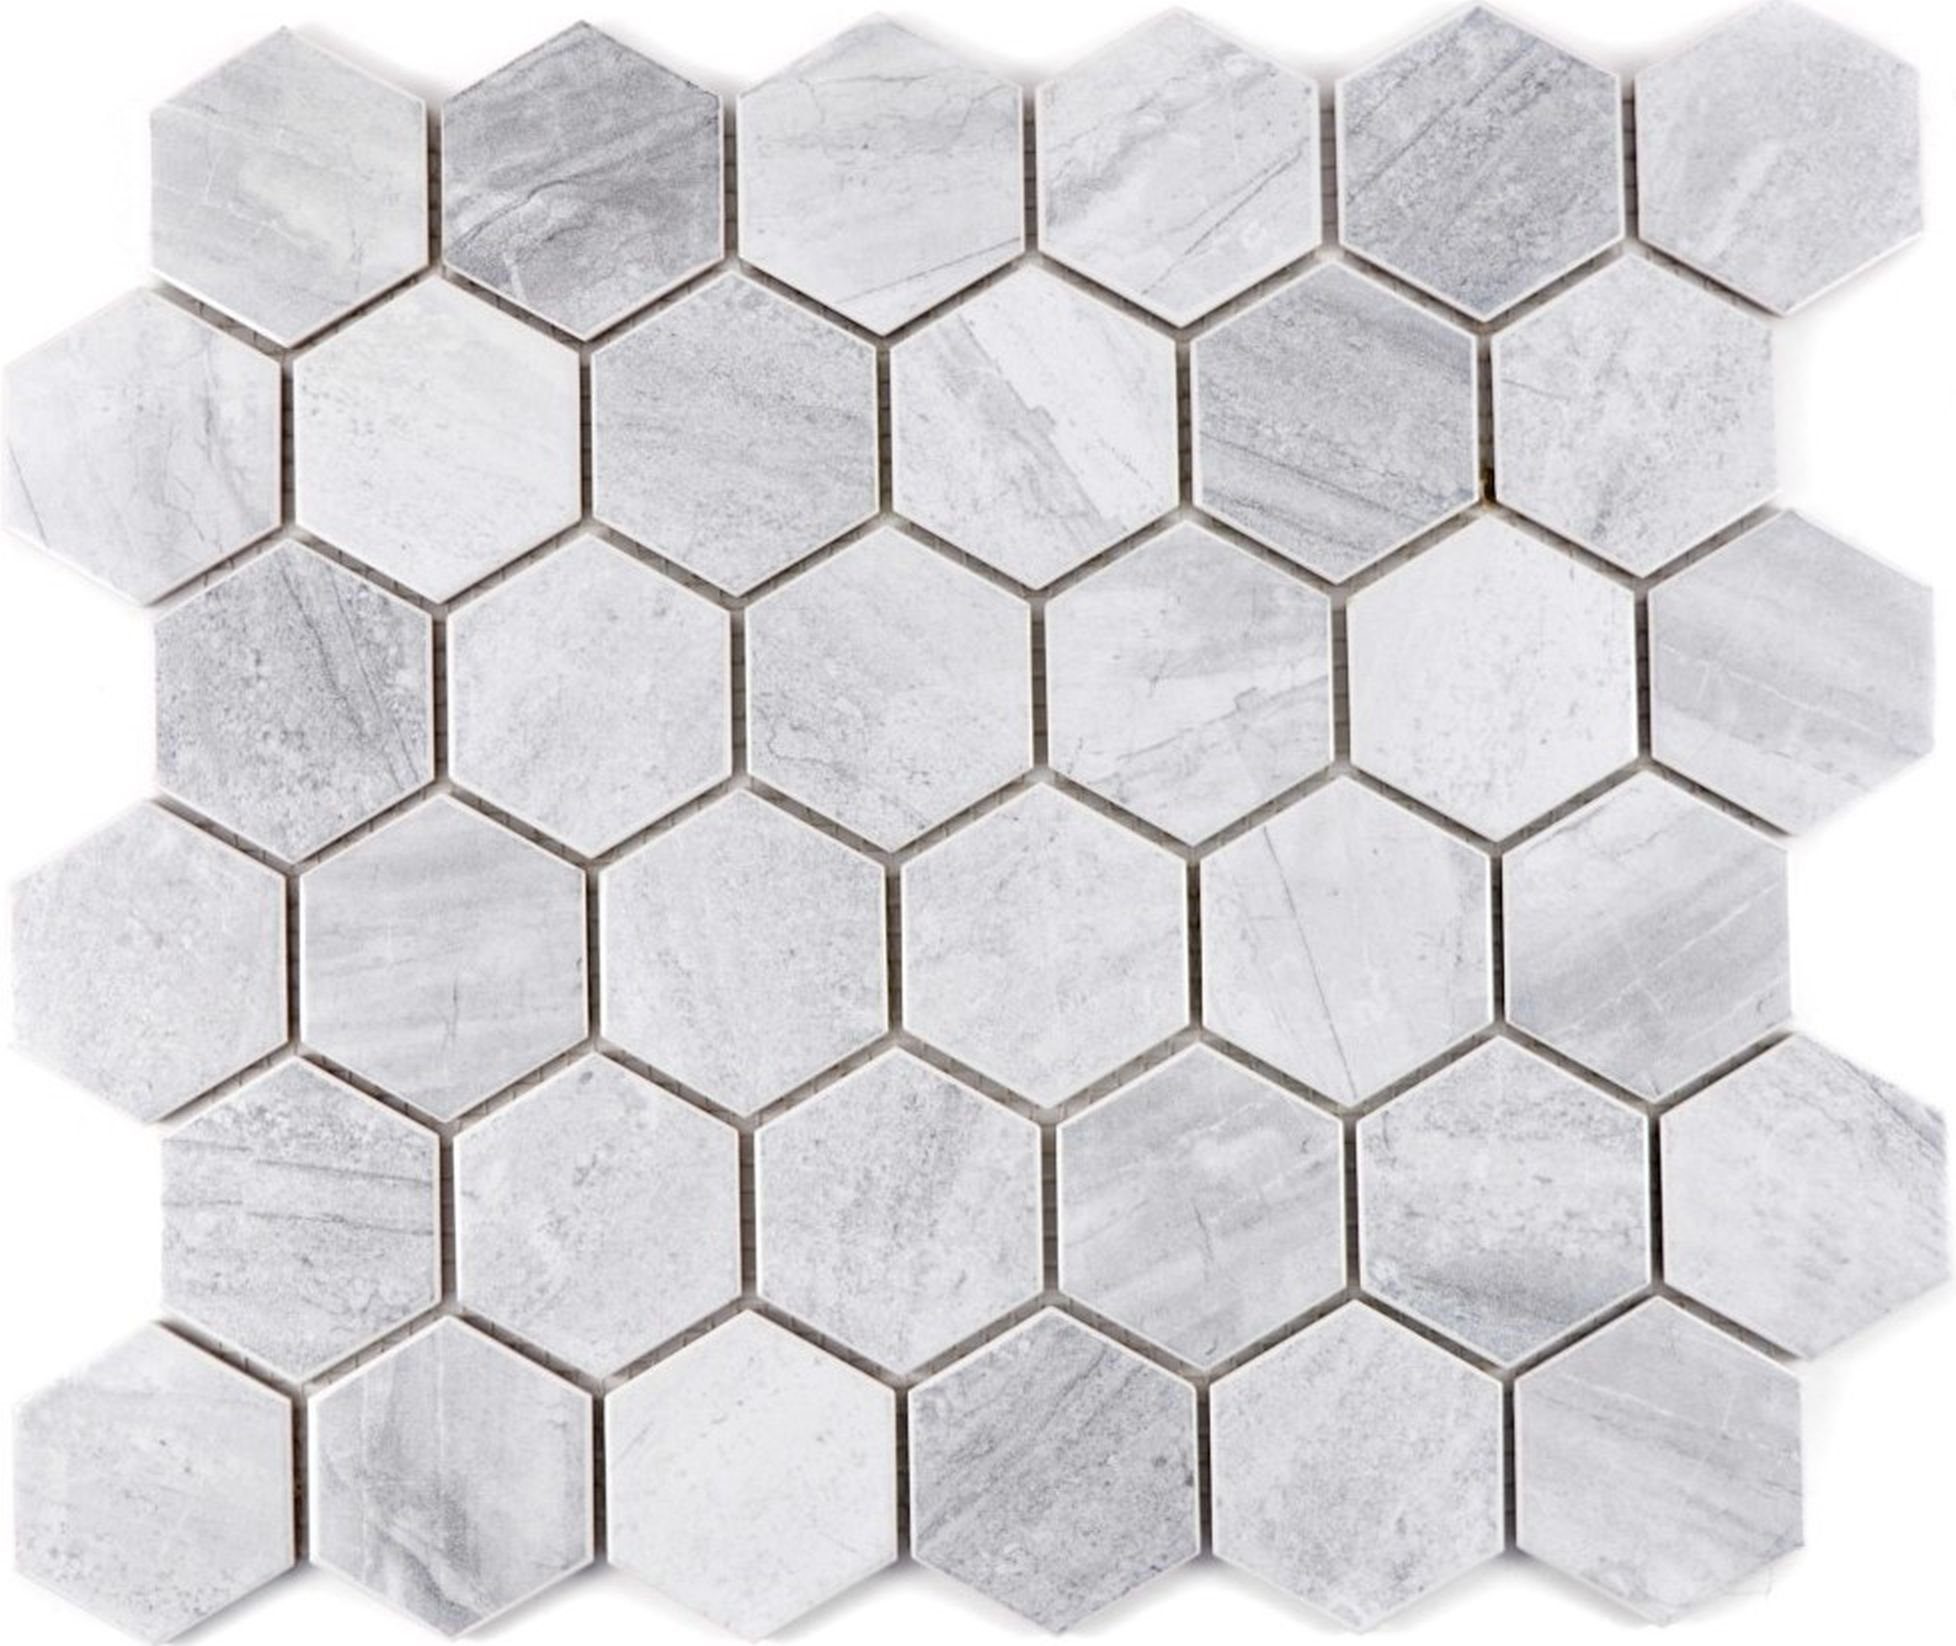 Mosani / Matten Hexagon 10 Mosaikfliesen Mosaikfliesen Keramikmosaik grau matt